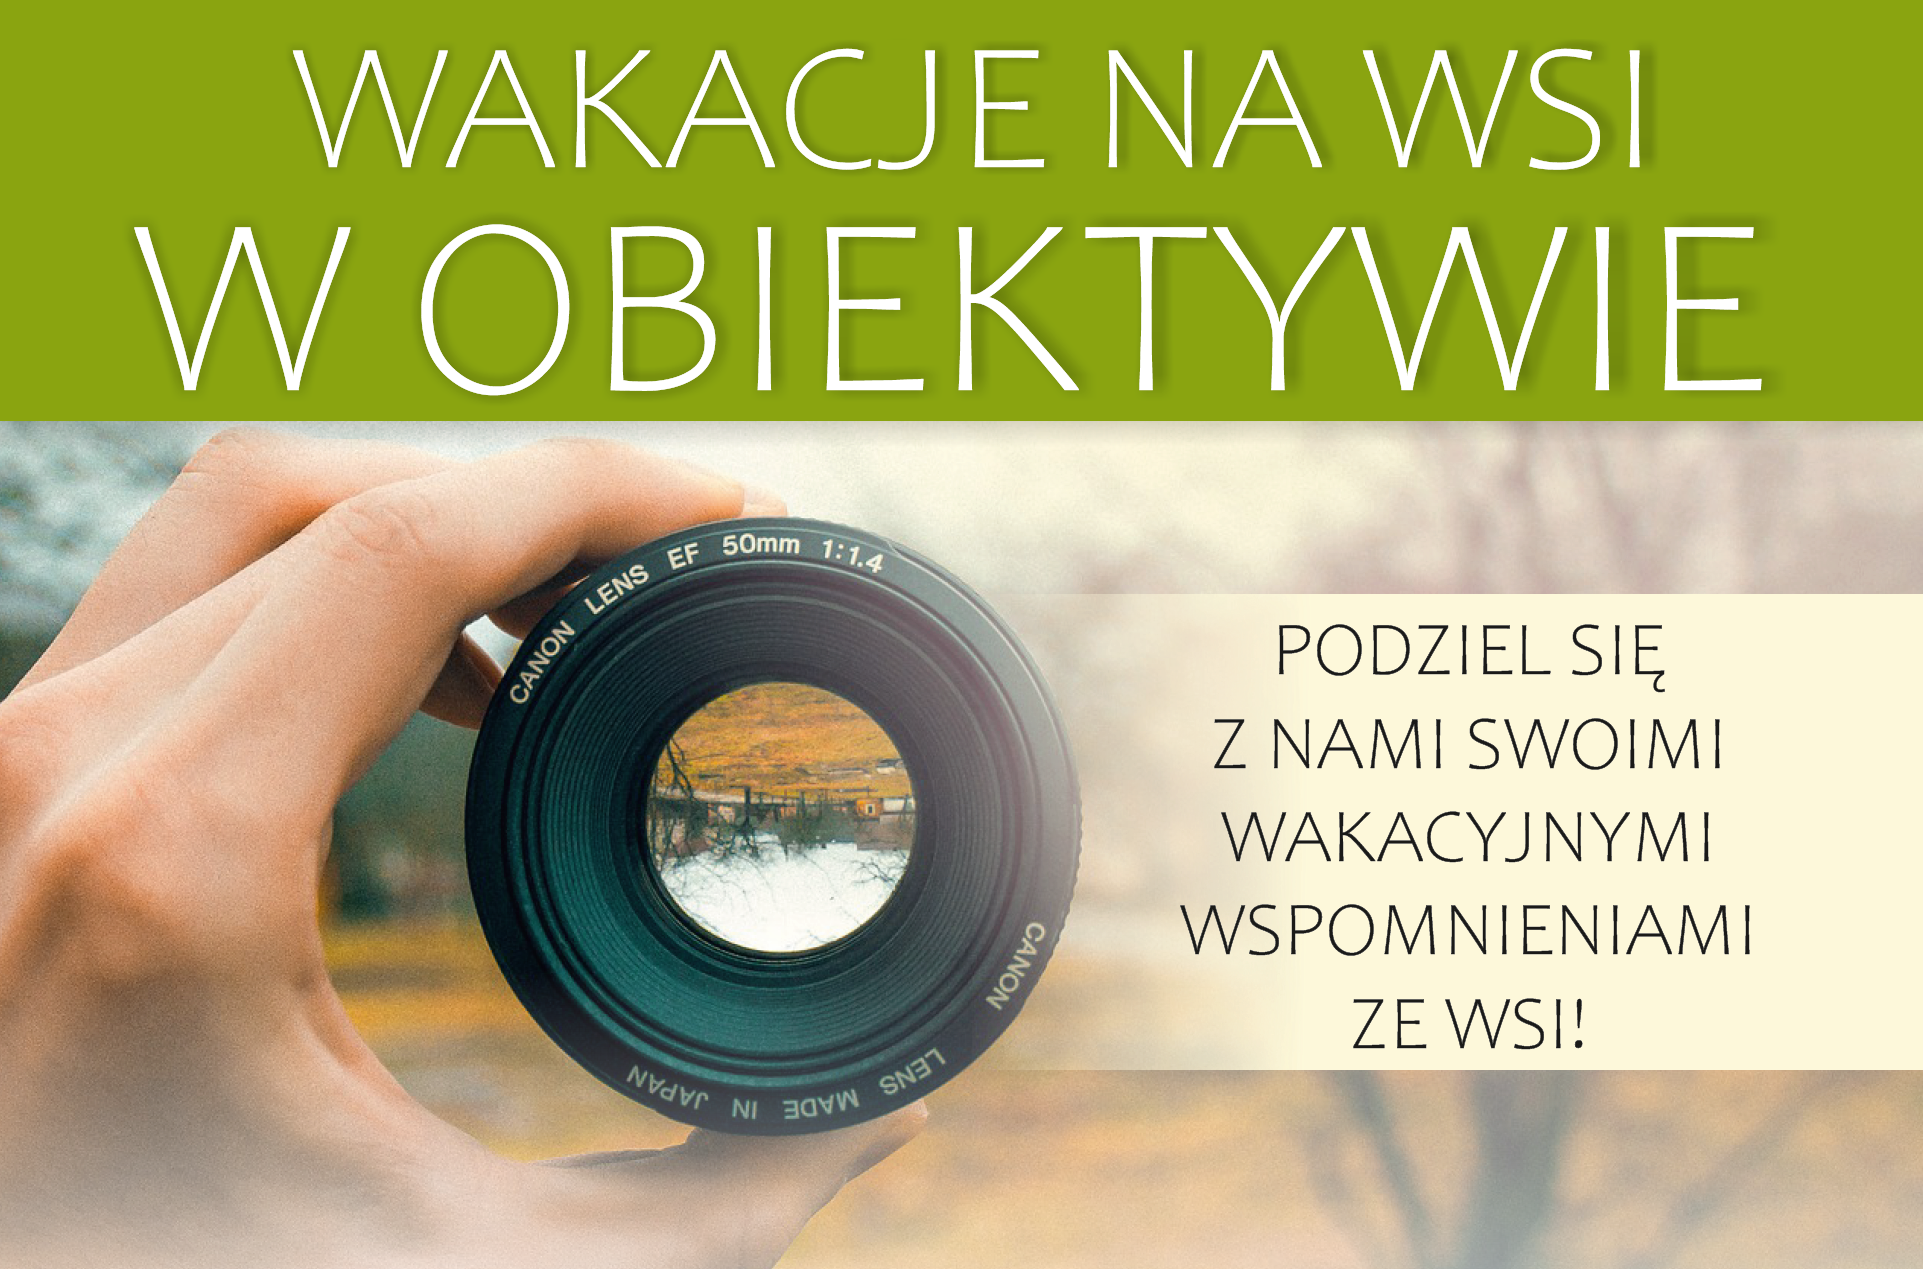 Thumbnail for the post titled: Wakacje na wsi w obiektywie